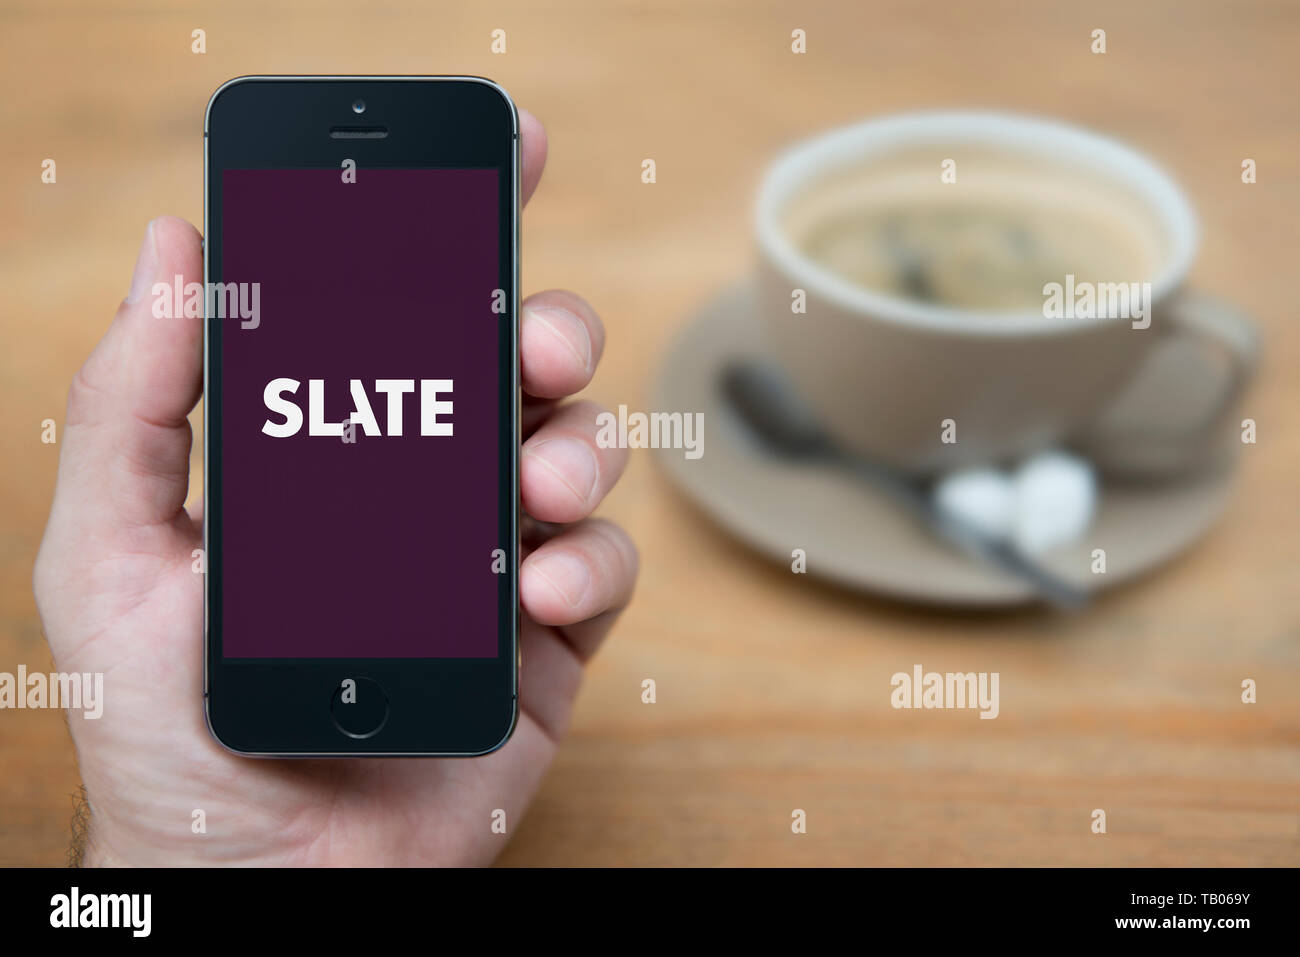 Un hombre mira el iPhone que muestra el logotipo de la revista Slate (uso Editorial solamente). Foto de stock